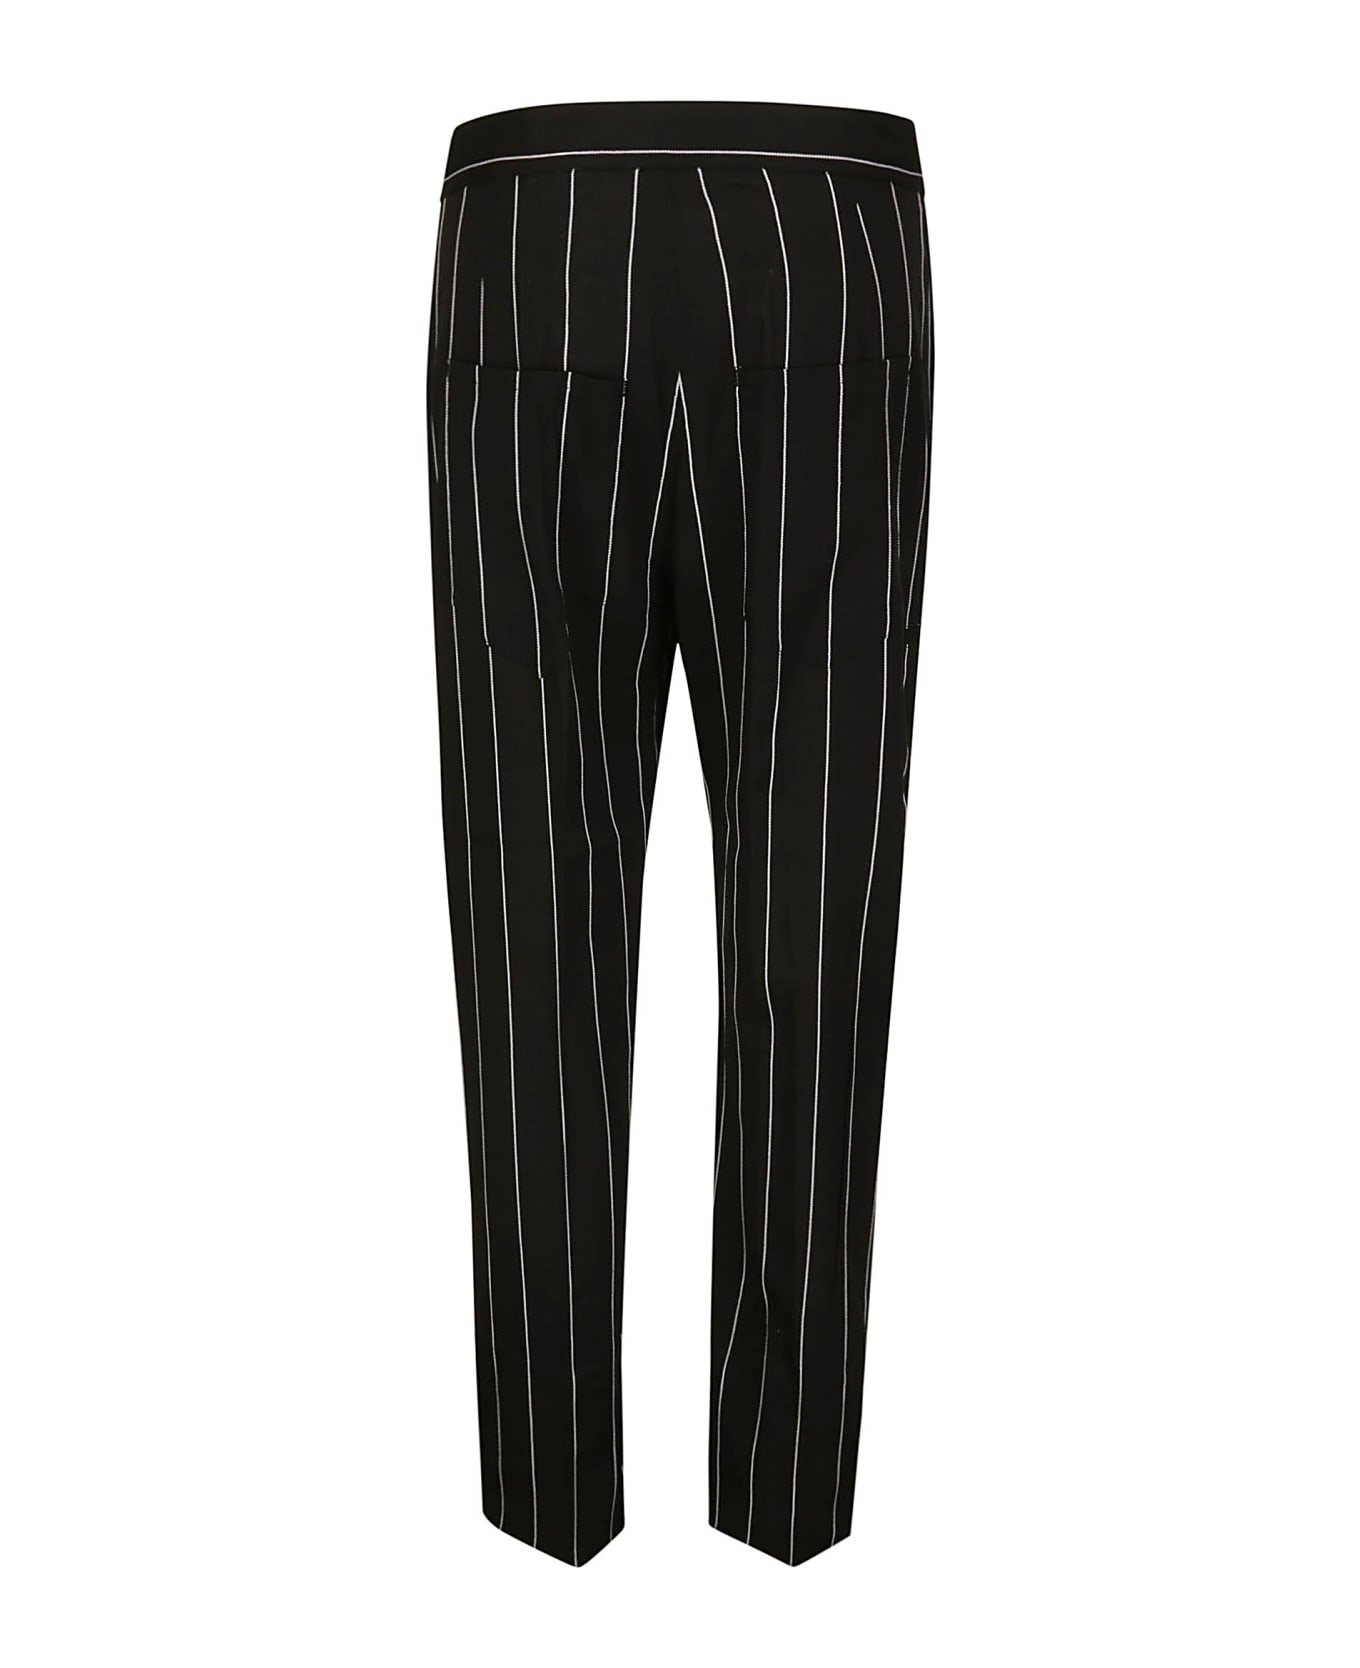 Setchu Origami Pants - BLACK